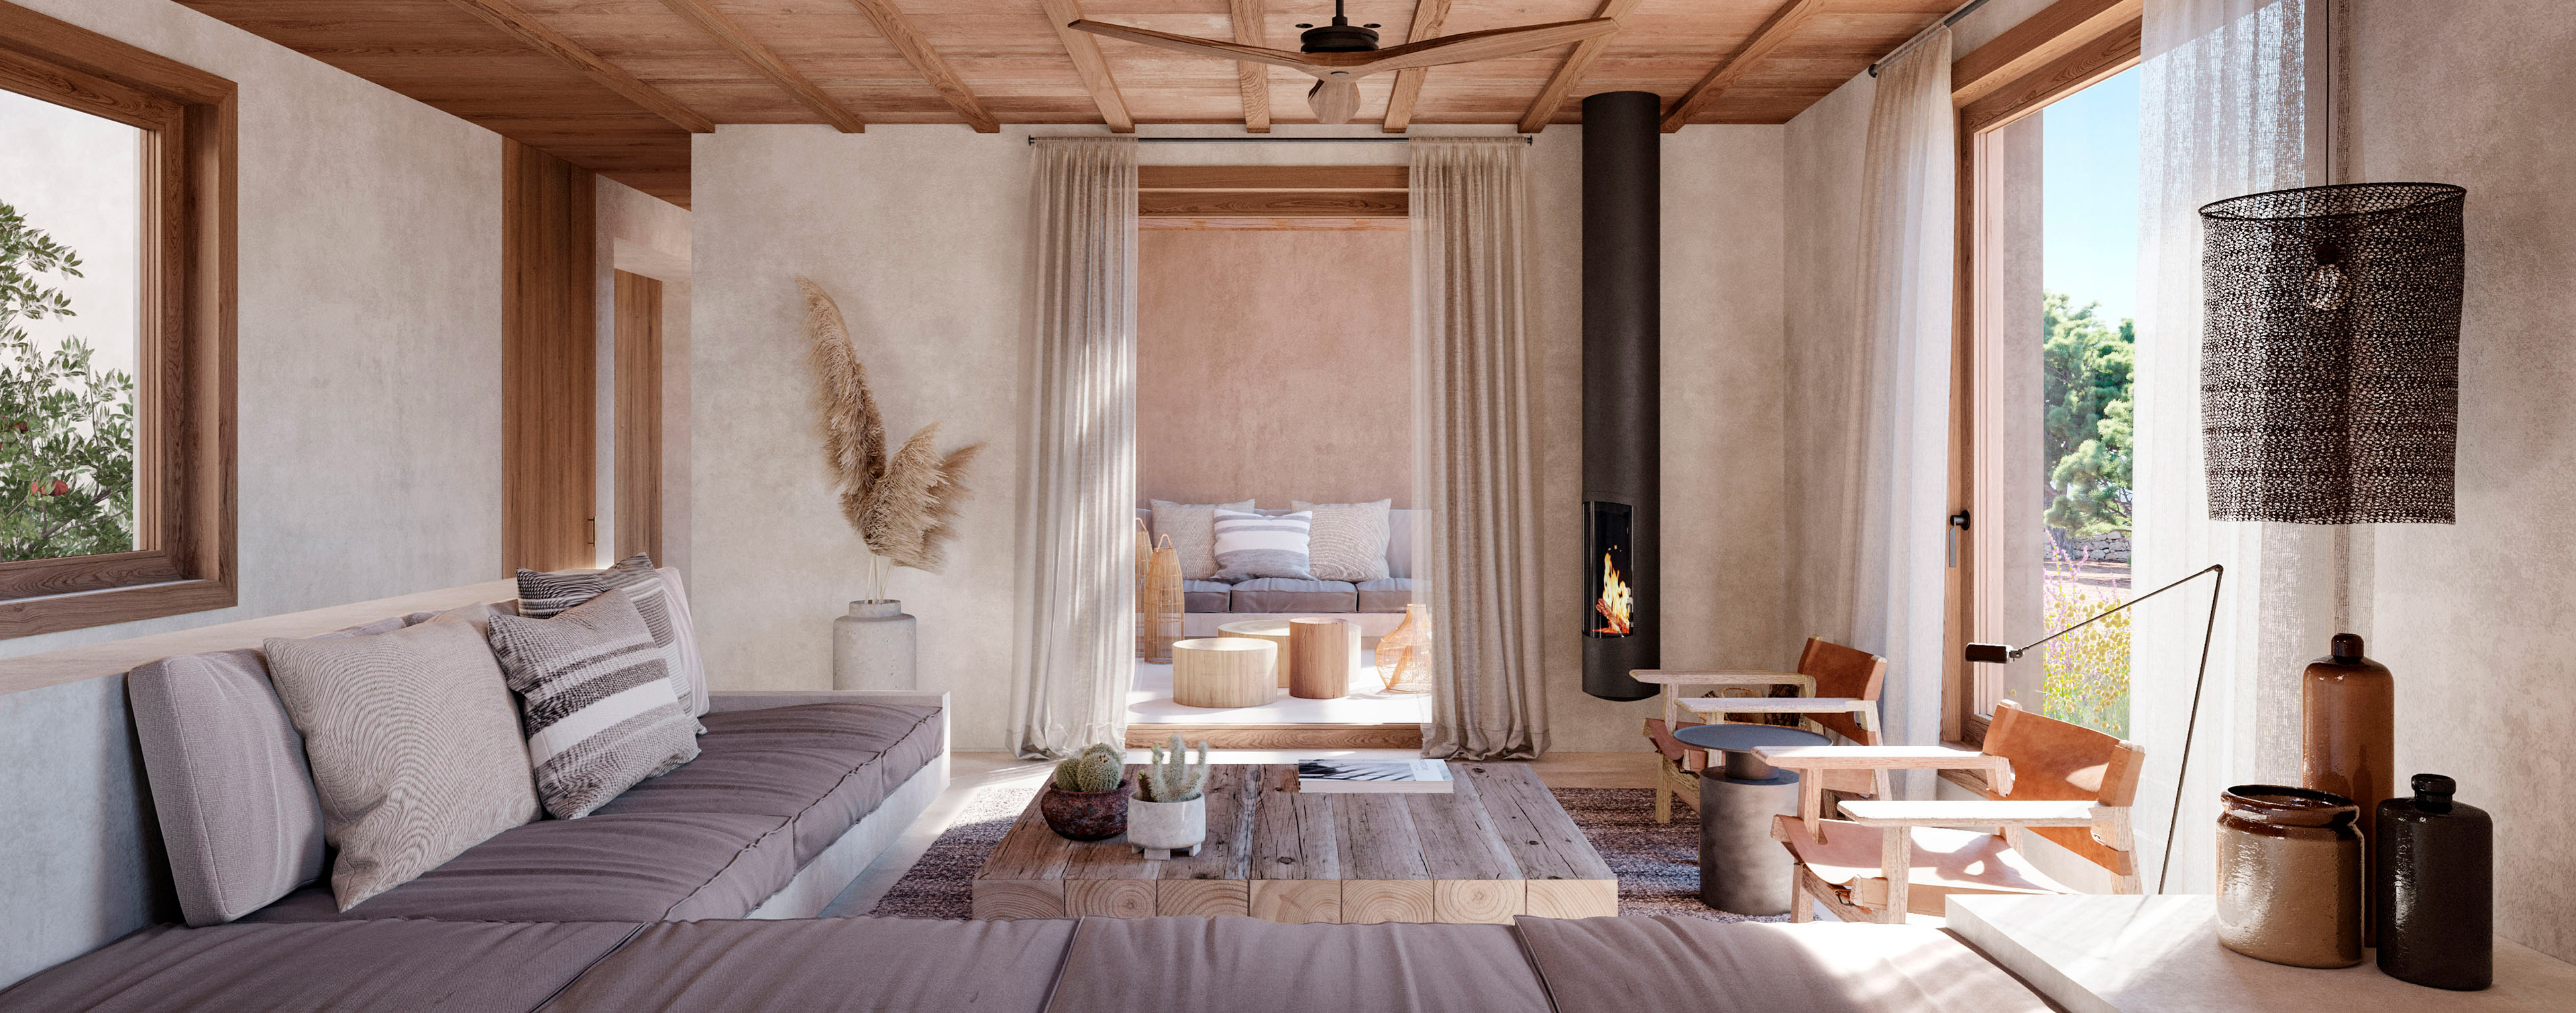 luv studio luxury architects formentera barbaria house IMG 03 - Formentera House 